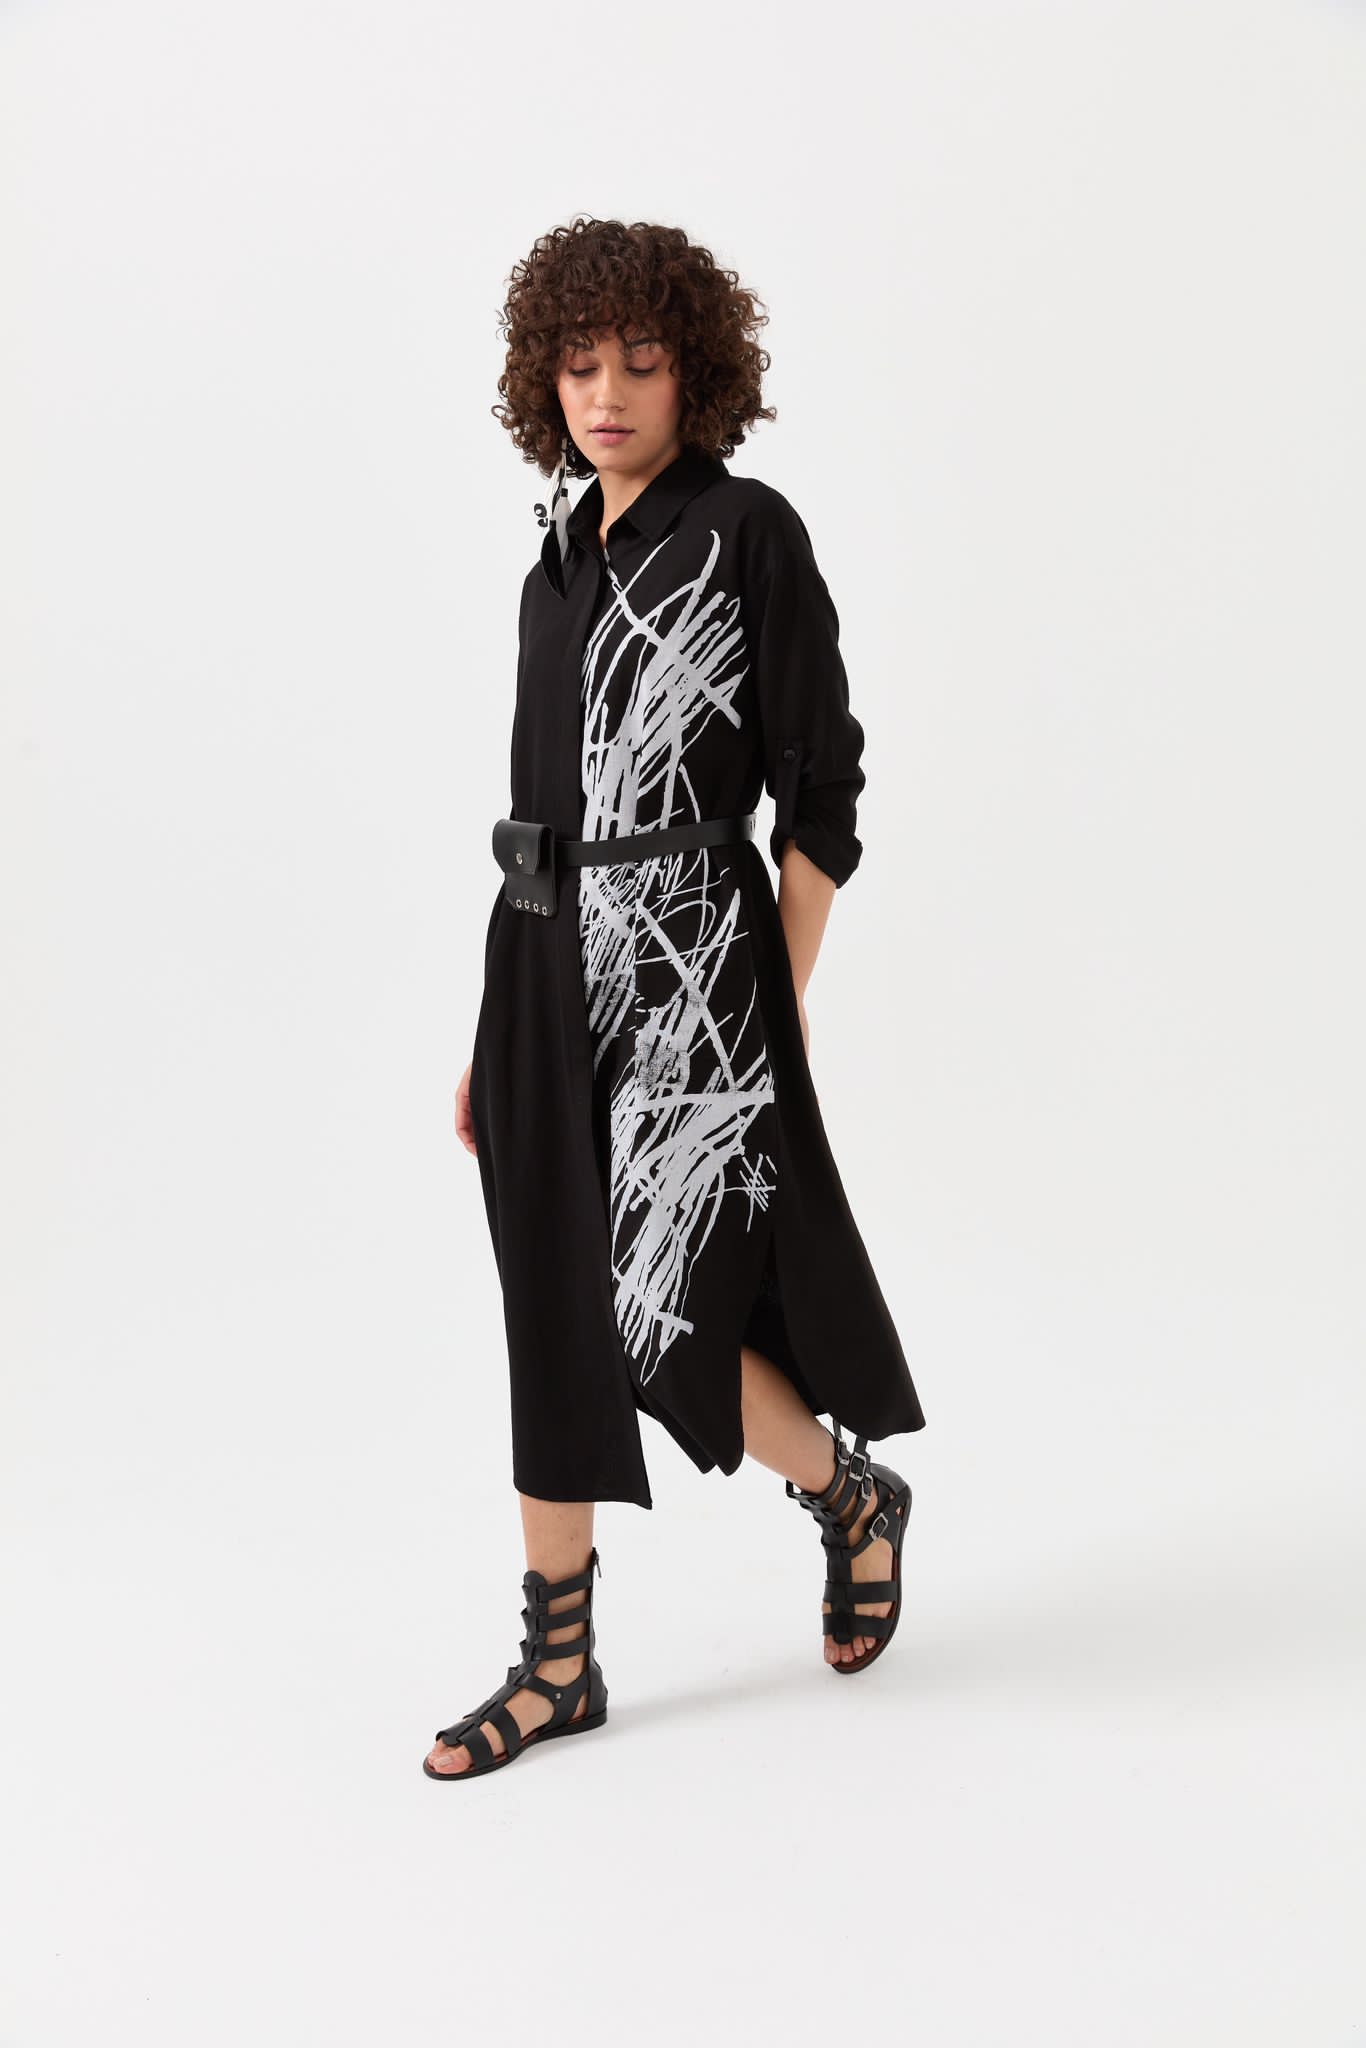 Linen Dress with Pleather Belt & Satchel Design - B-138 - Black